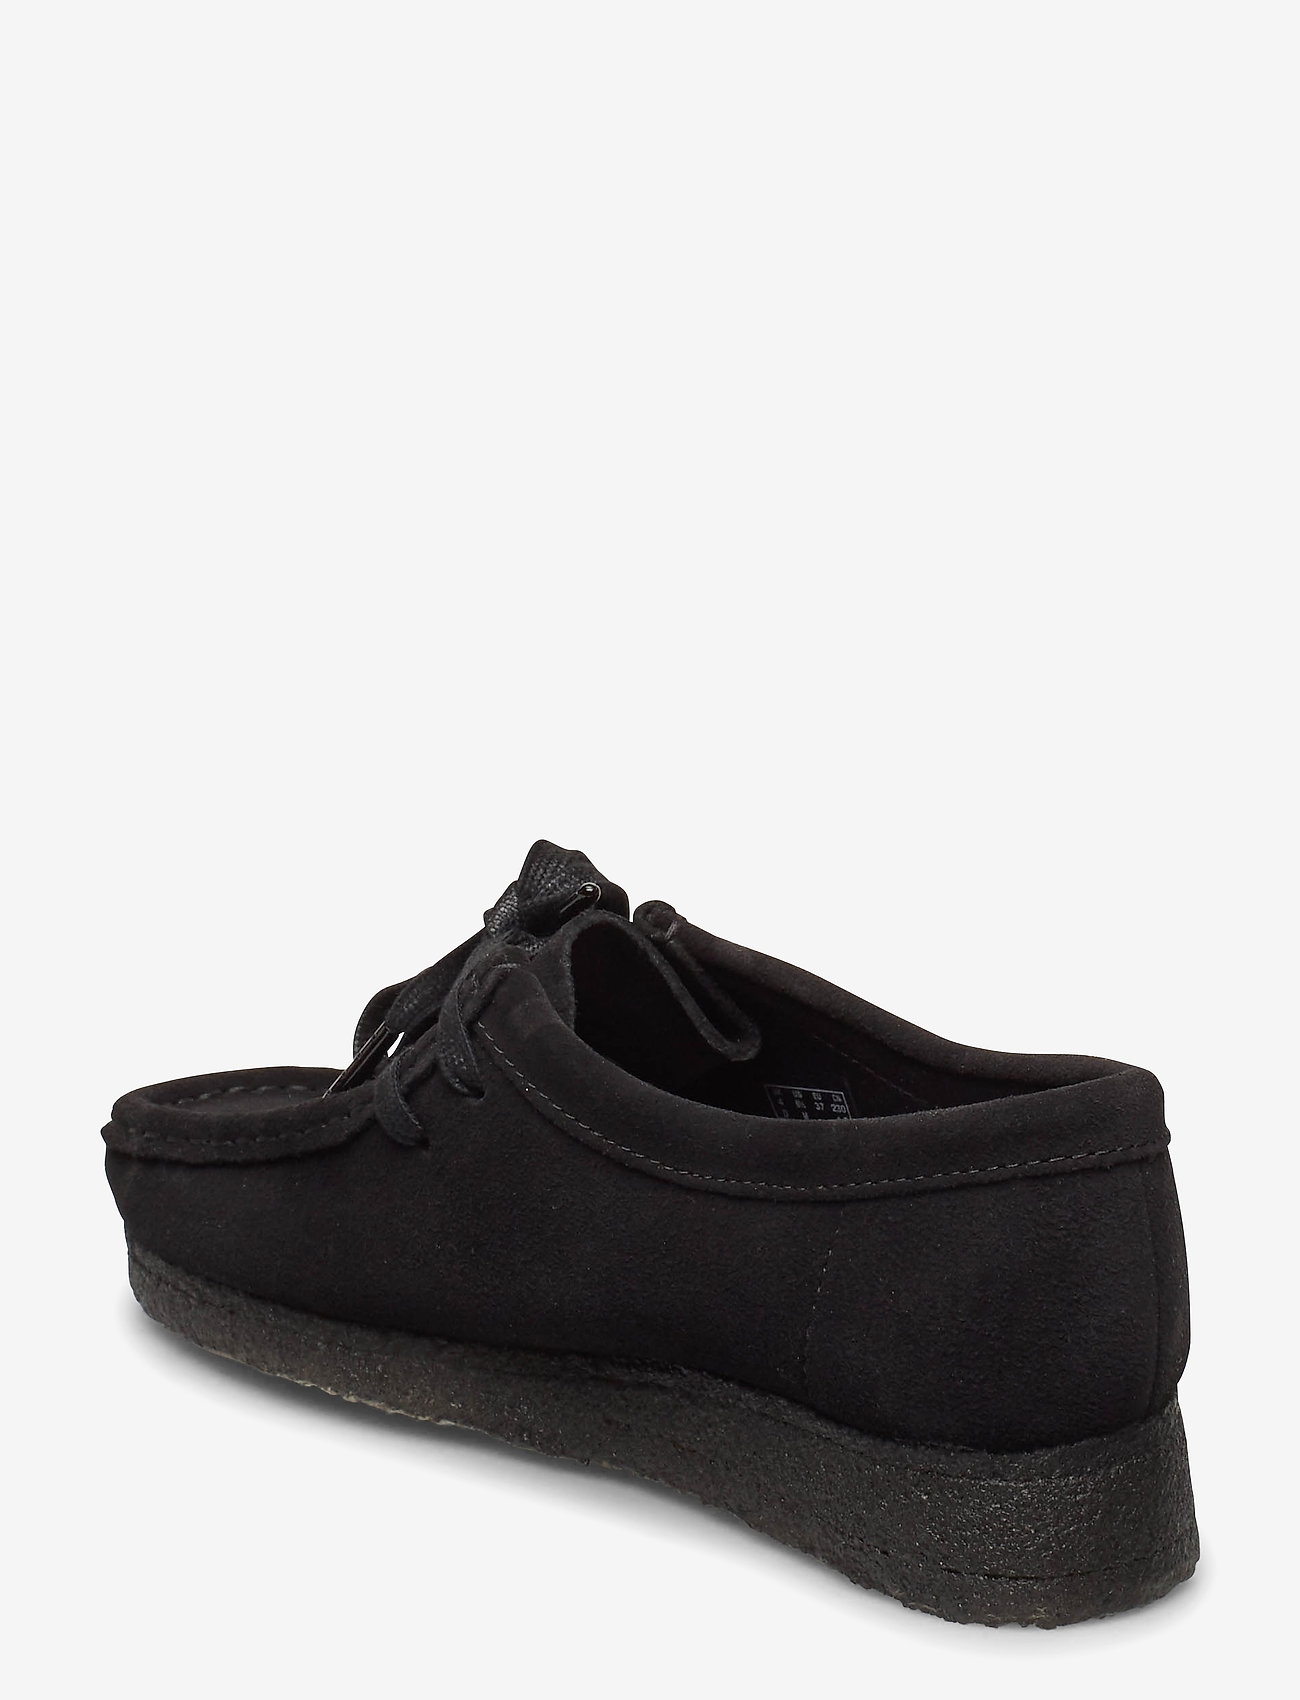 wallabee shoes black